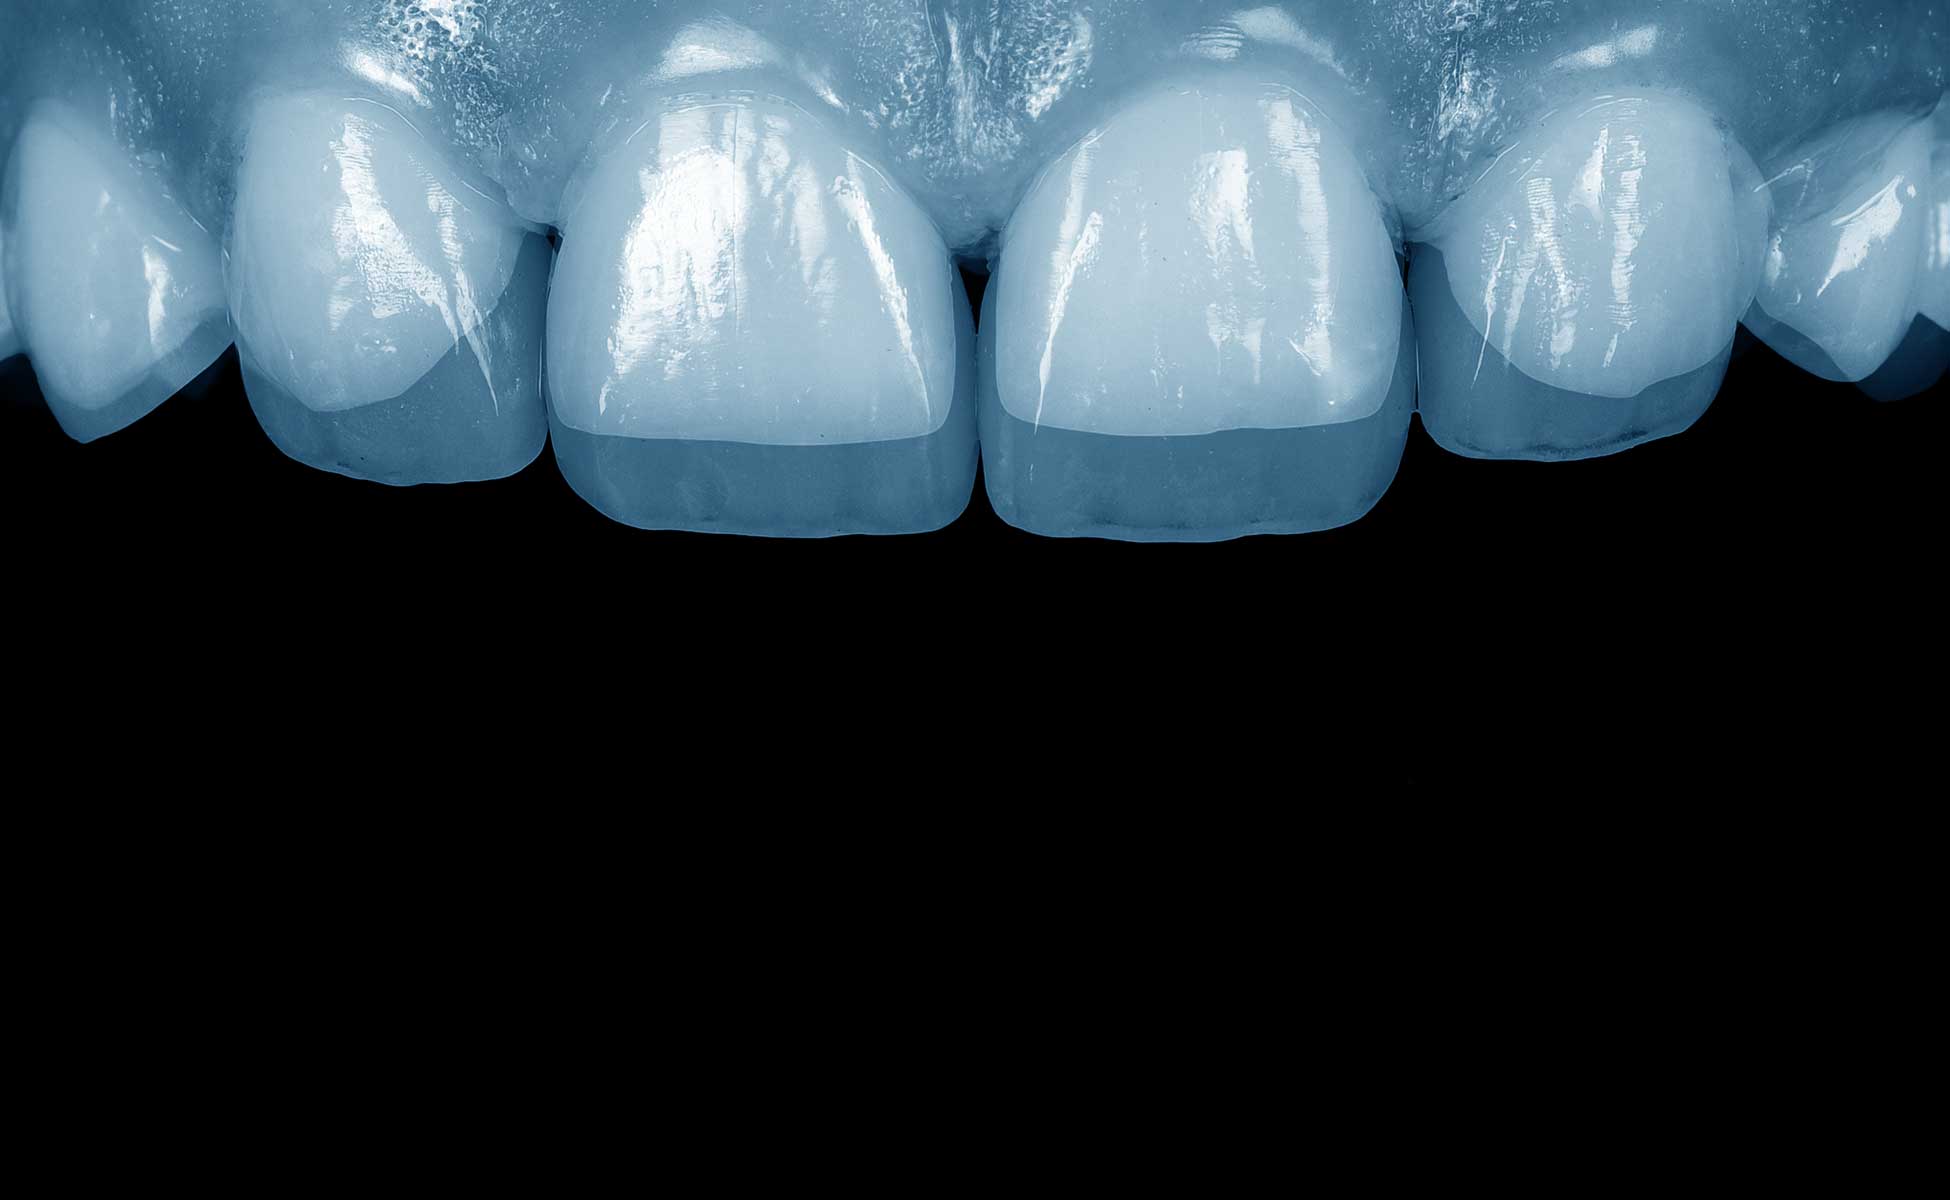 Prikaz prednjih zuba gornje vilice na tamnoj pozadini s prozirnim obrisom ljuskica za zube preko njih